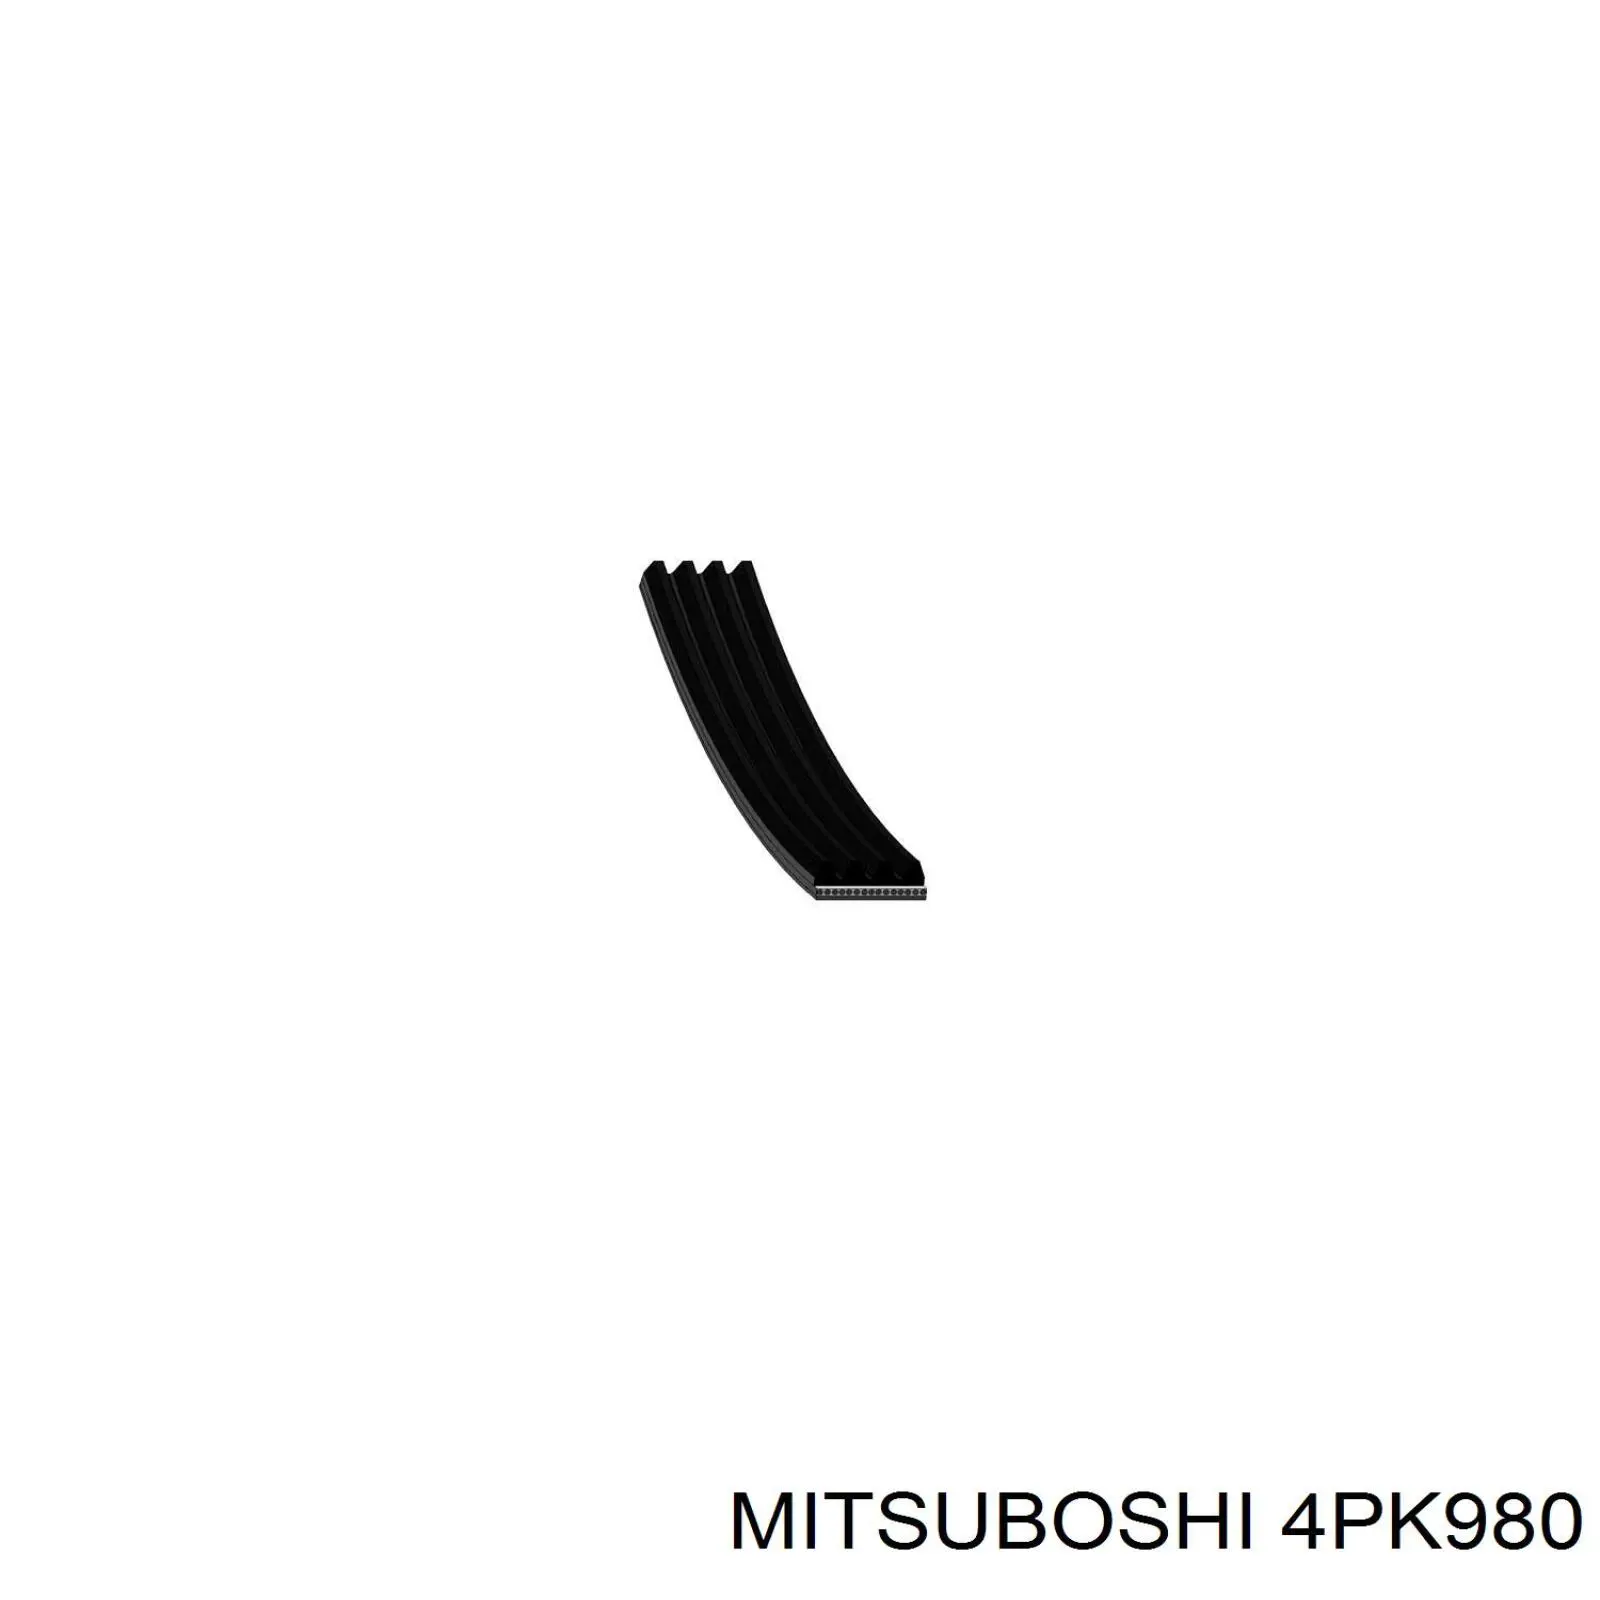 4PK980 Mitsuboshi ремень генератора